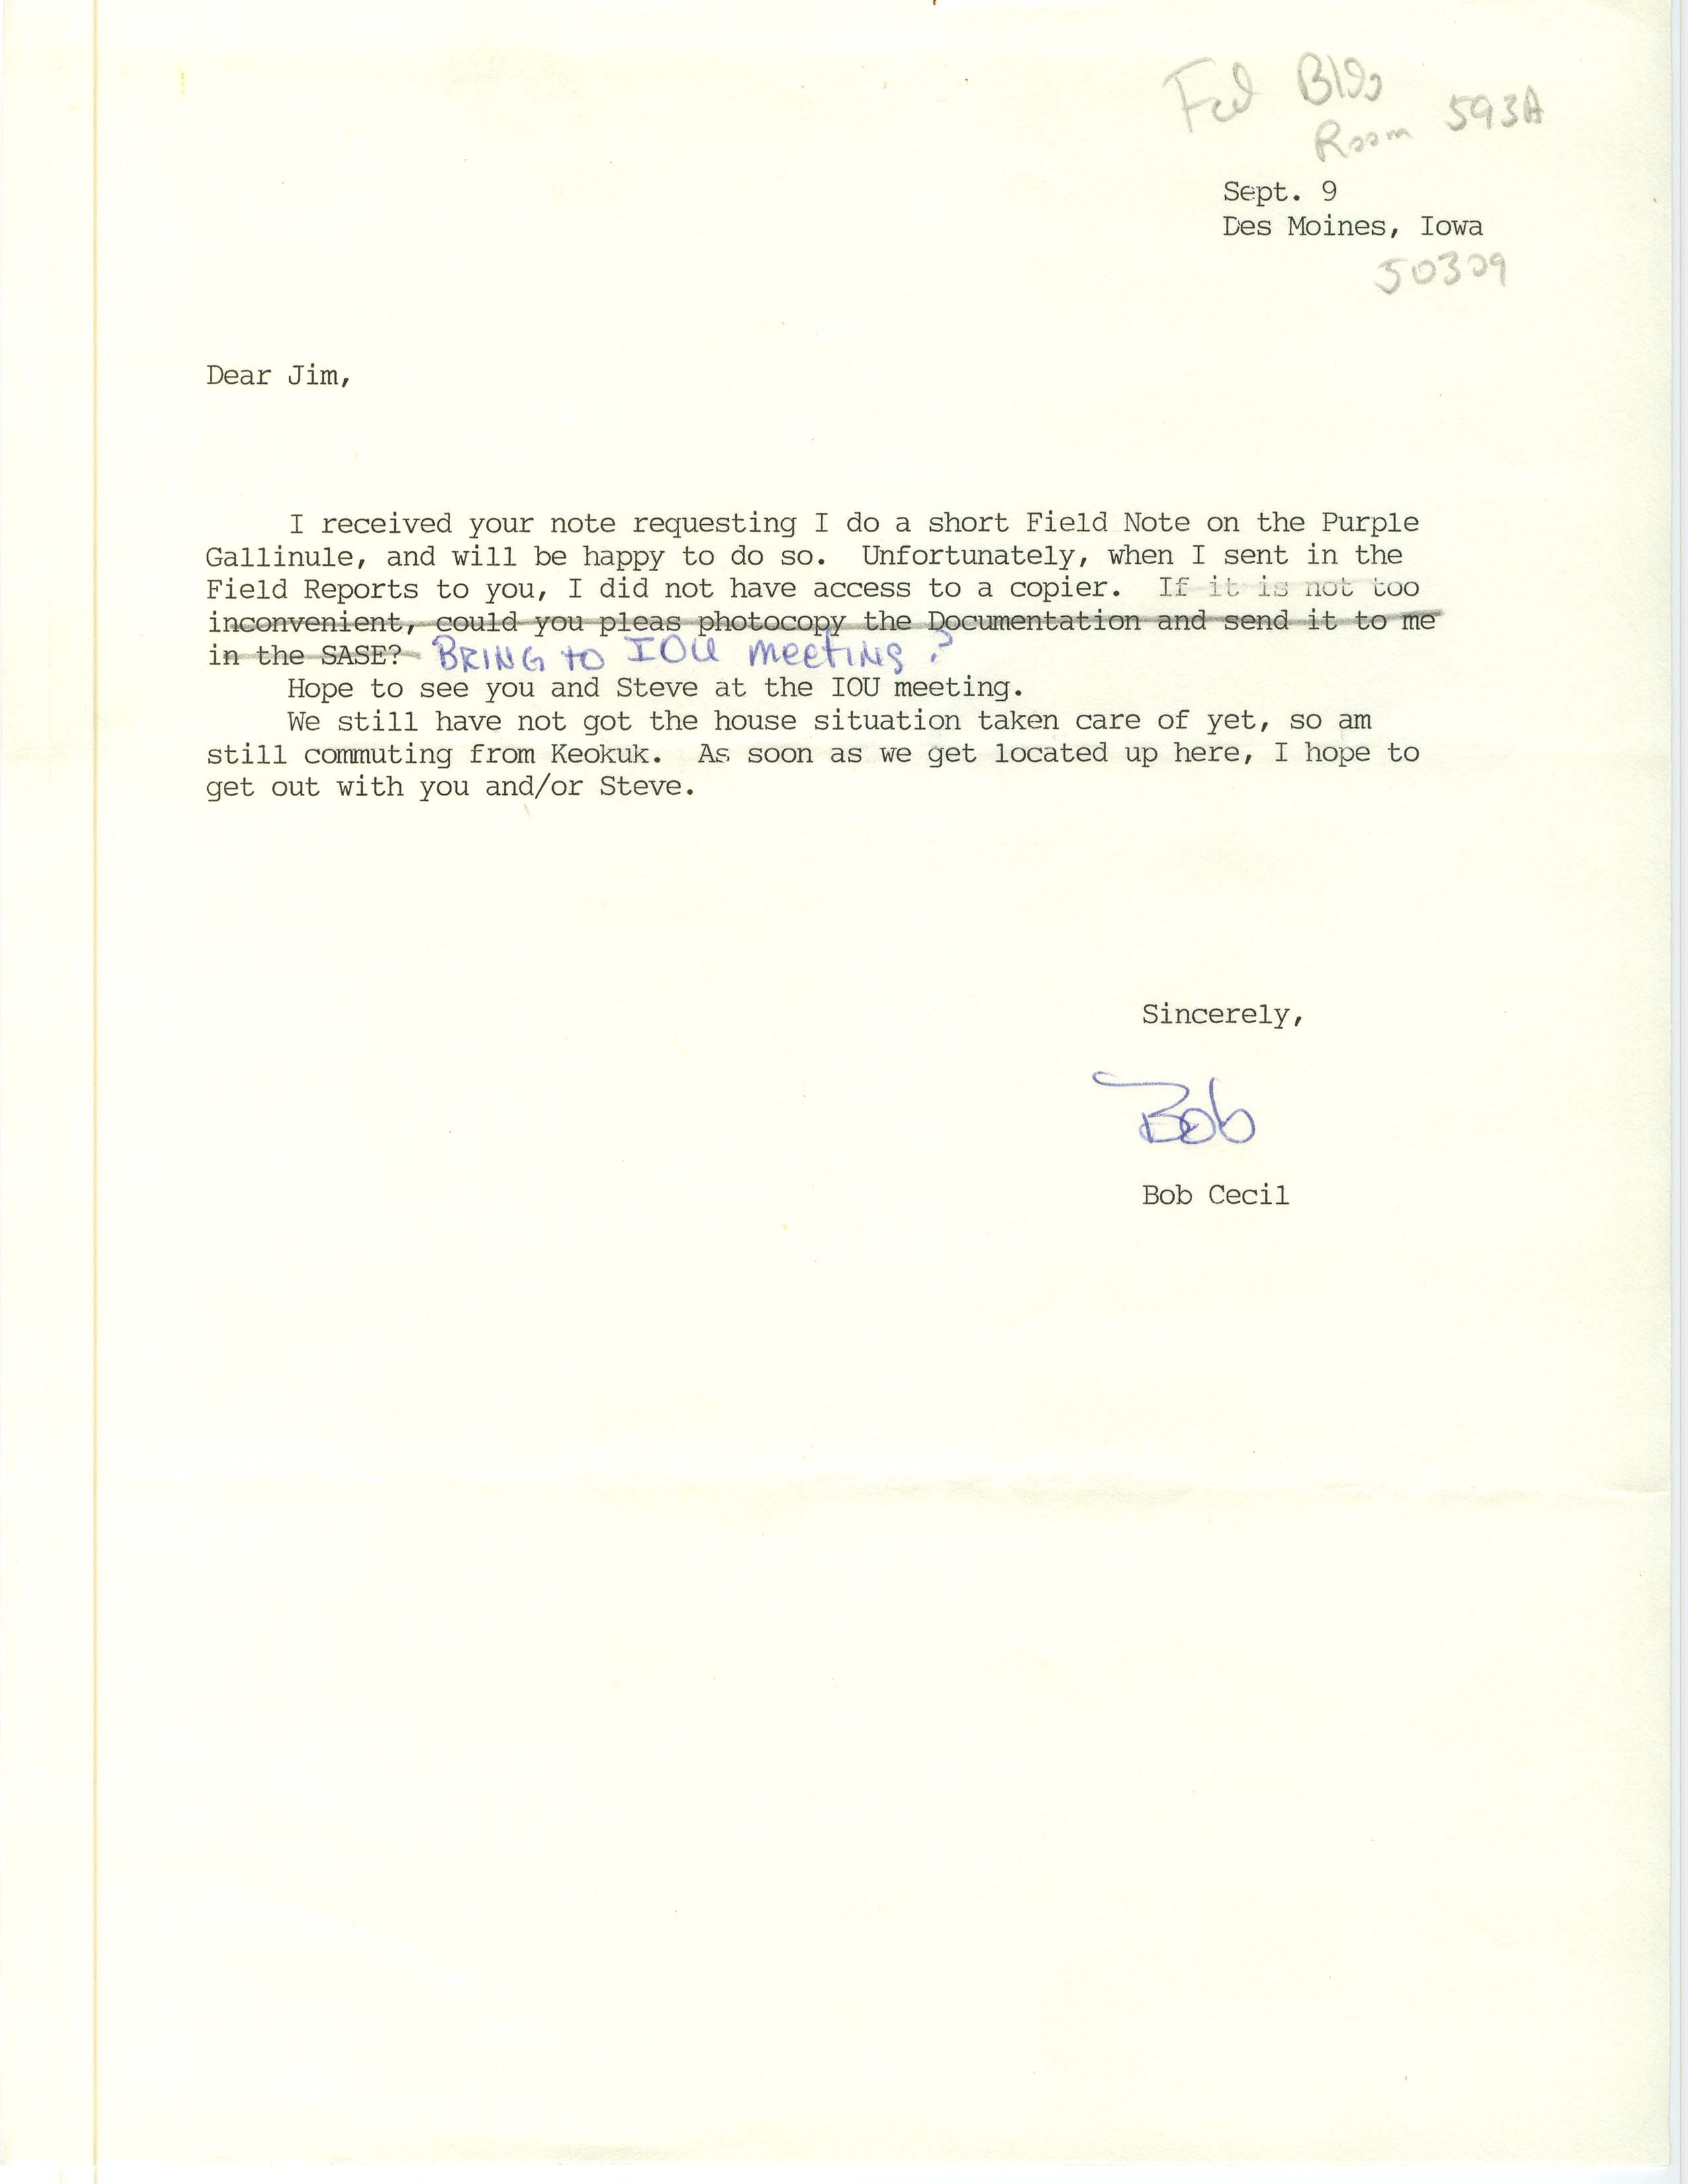 Robert I. Cecil letter to James J. Dinsmore regarding a report on the Purple Gallinule, September 9, 1988